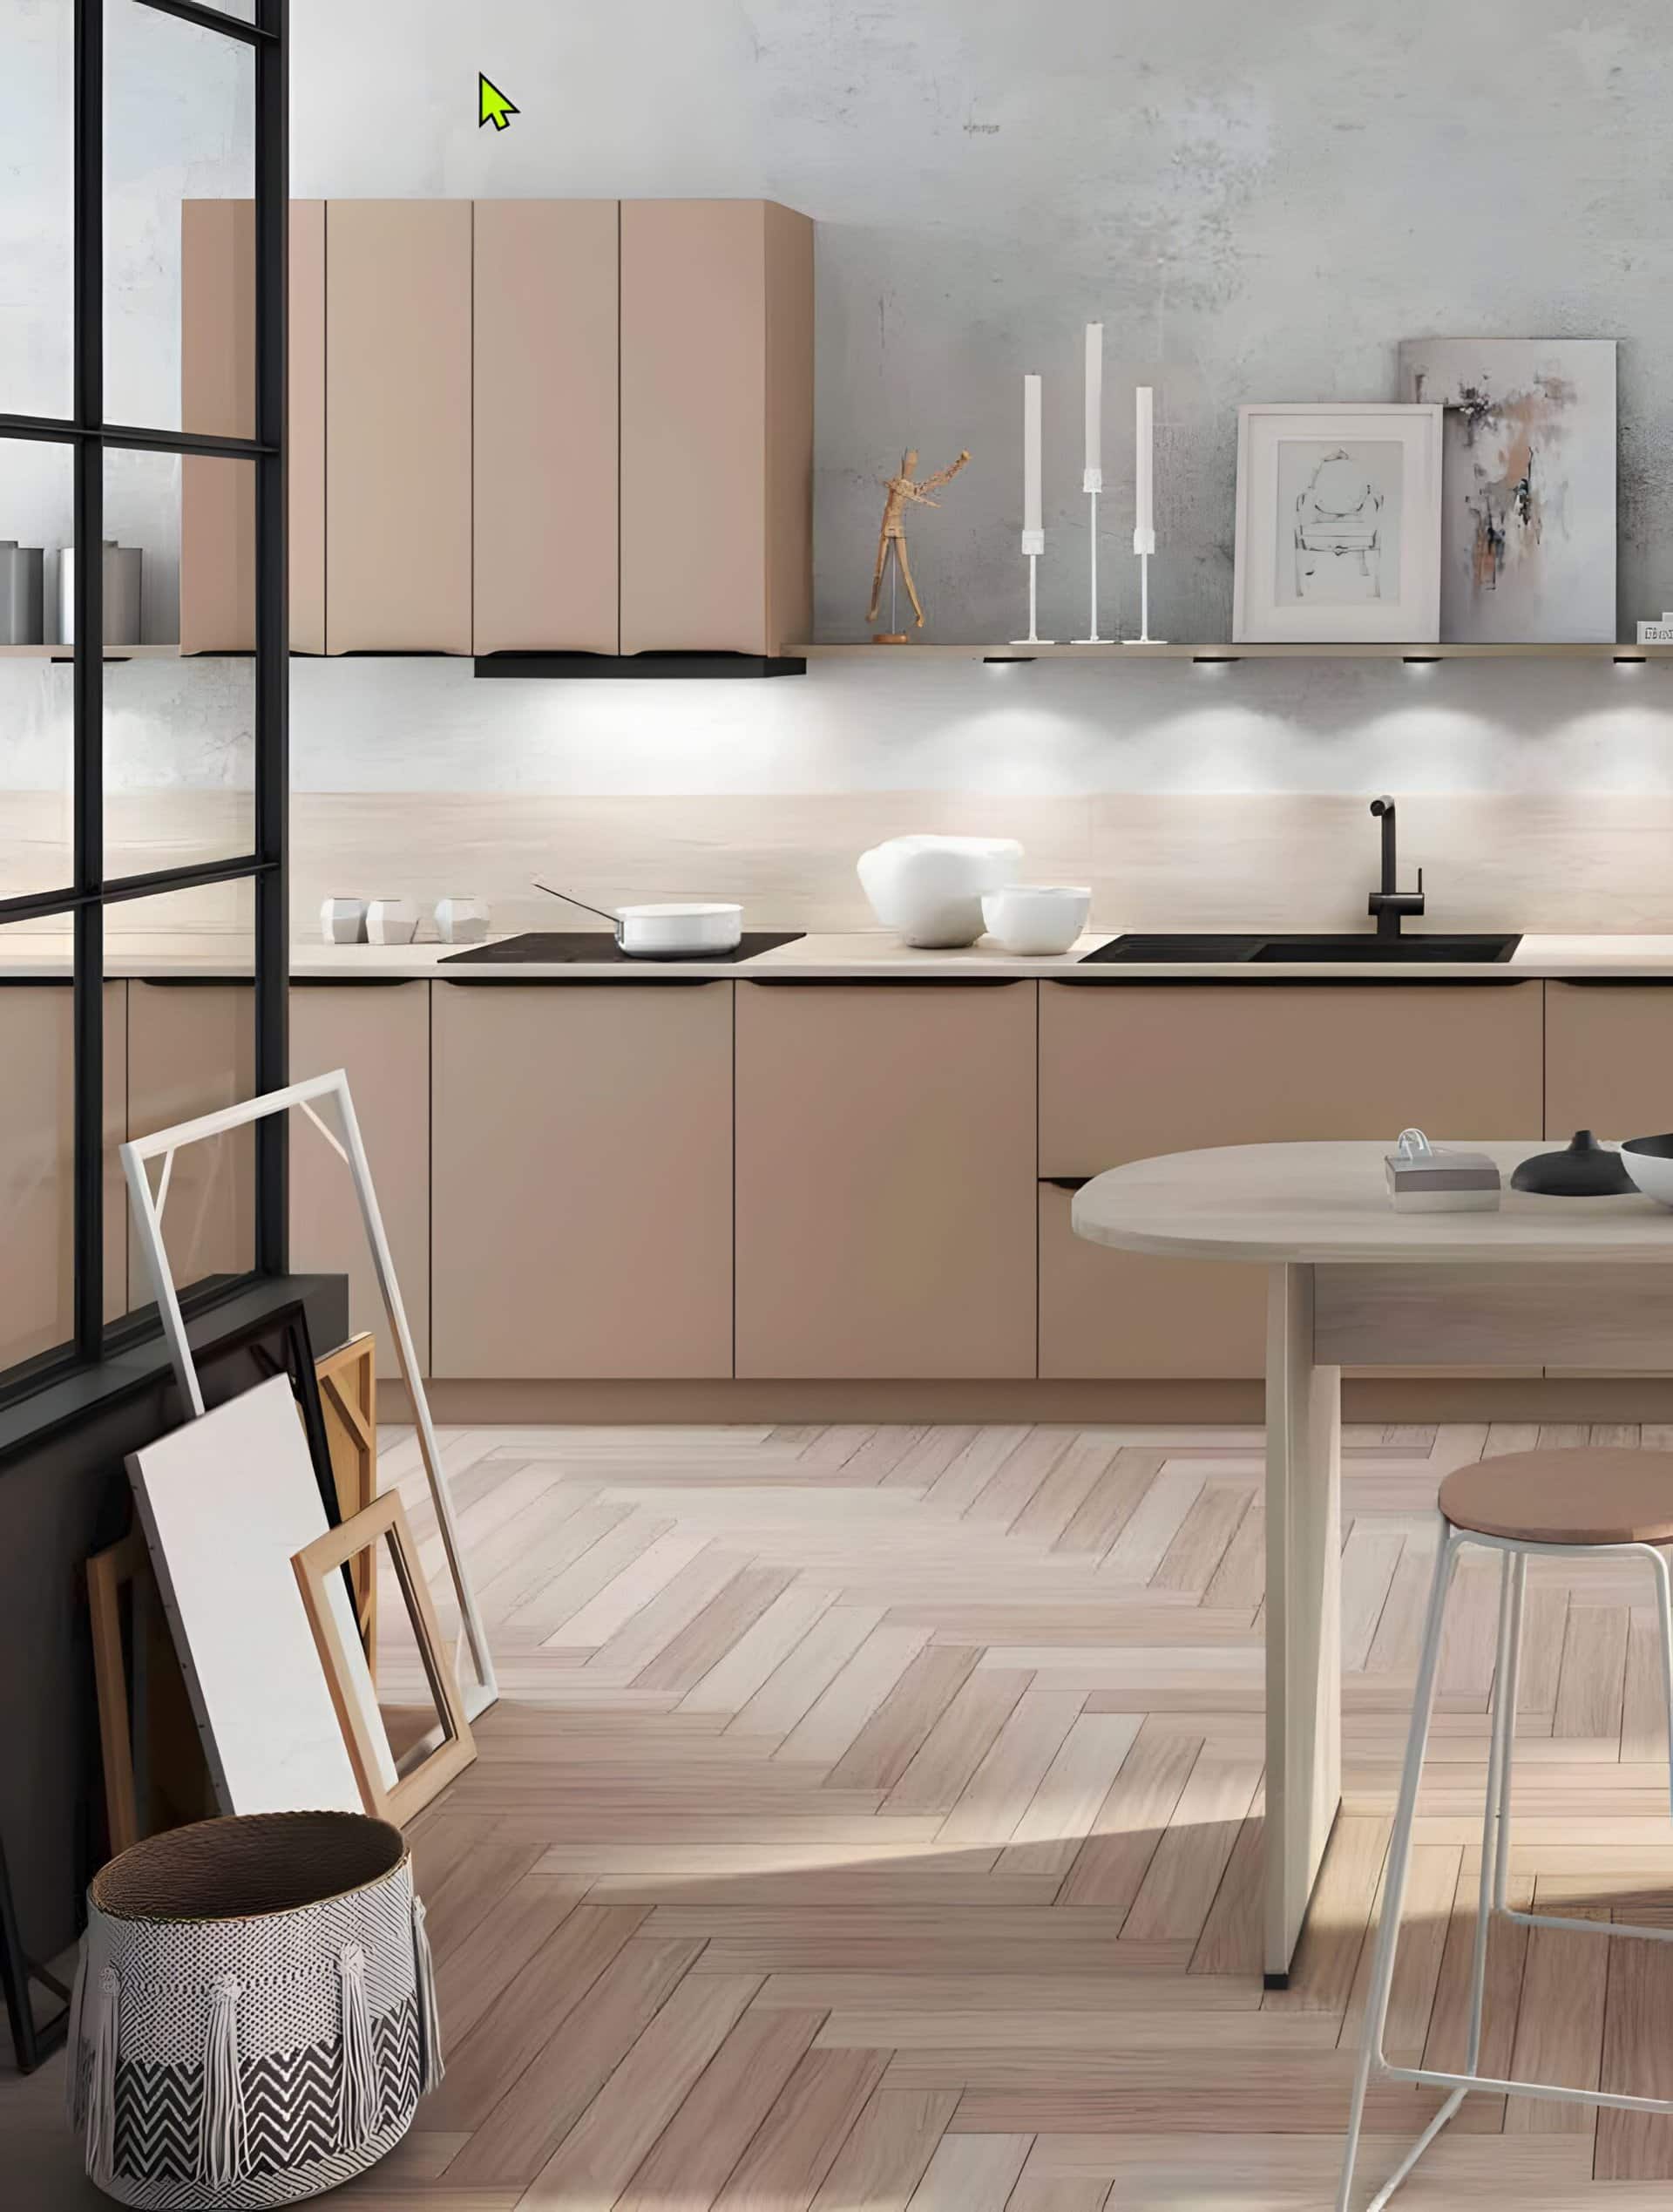 Modern kitchen interior with German kitchen cabinets, light wood tones, and minimalist decor - Burger Series Melamine Cindy